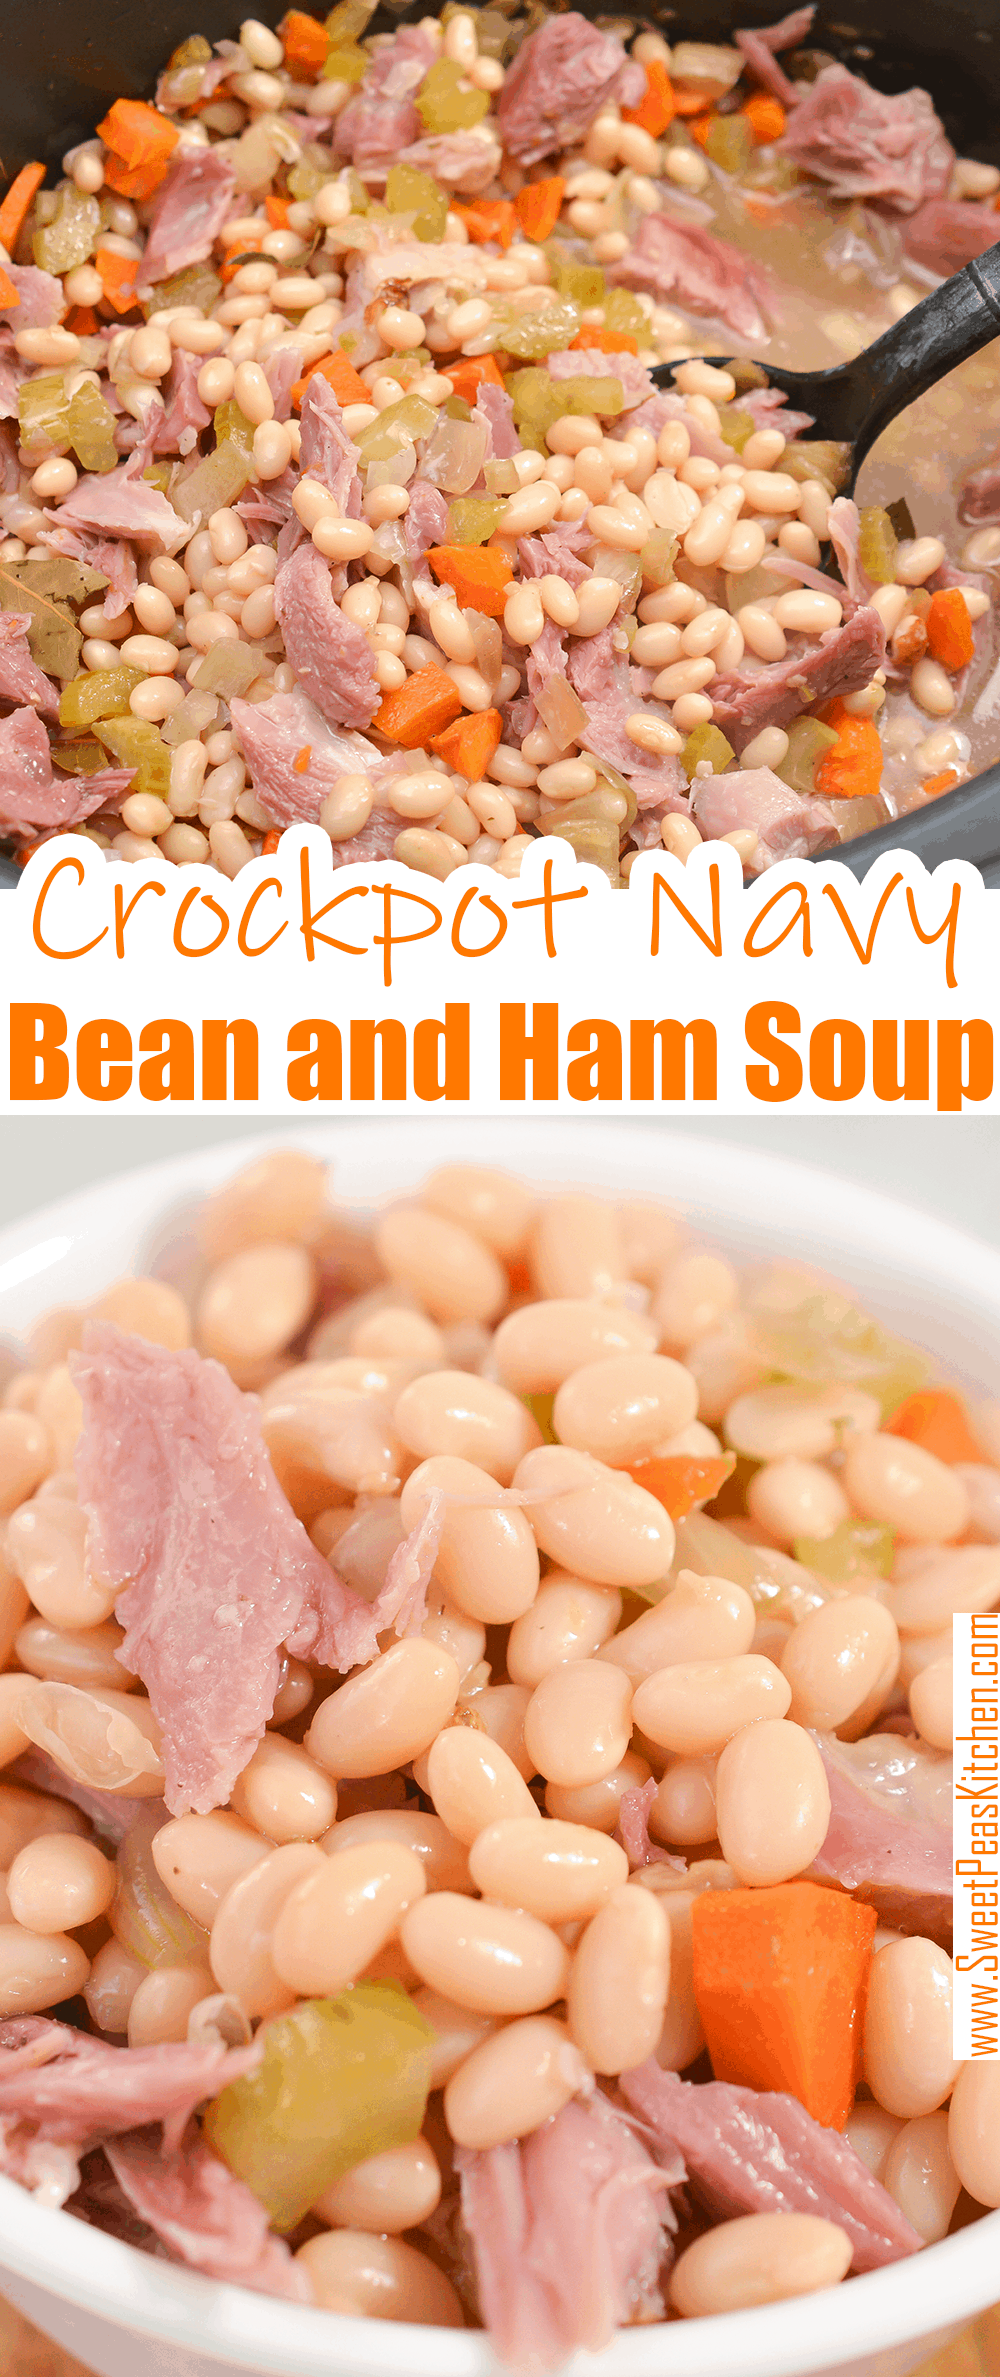 Crockpot Navy Bean and Ham Soup on pinterest